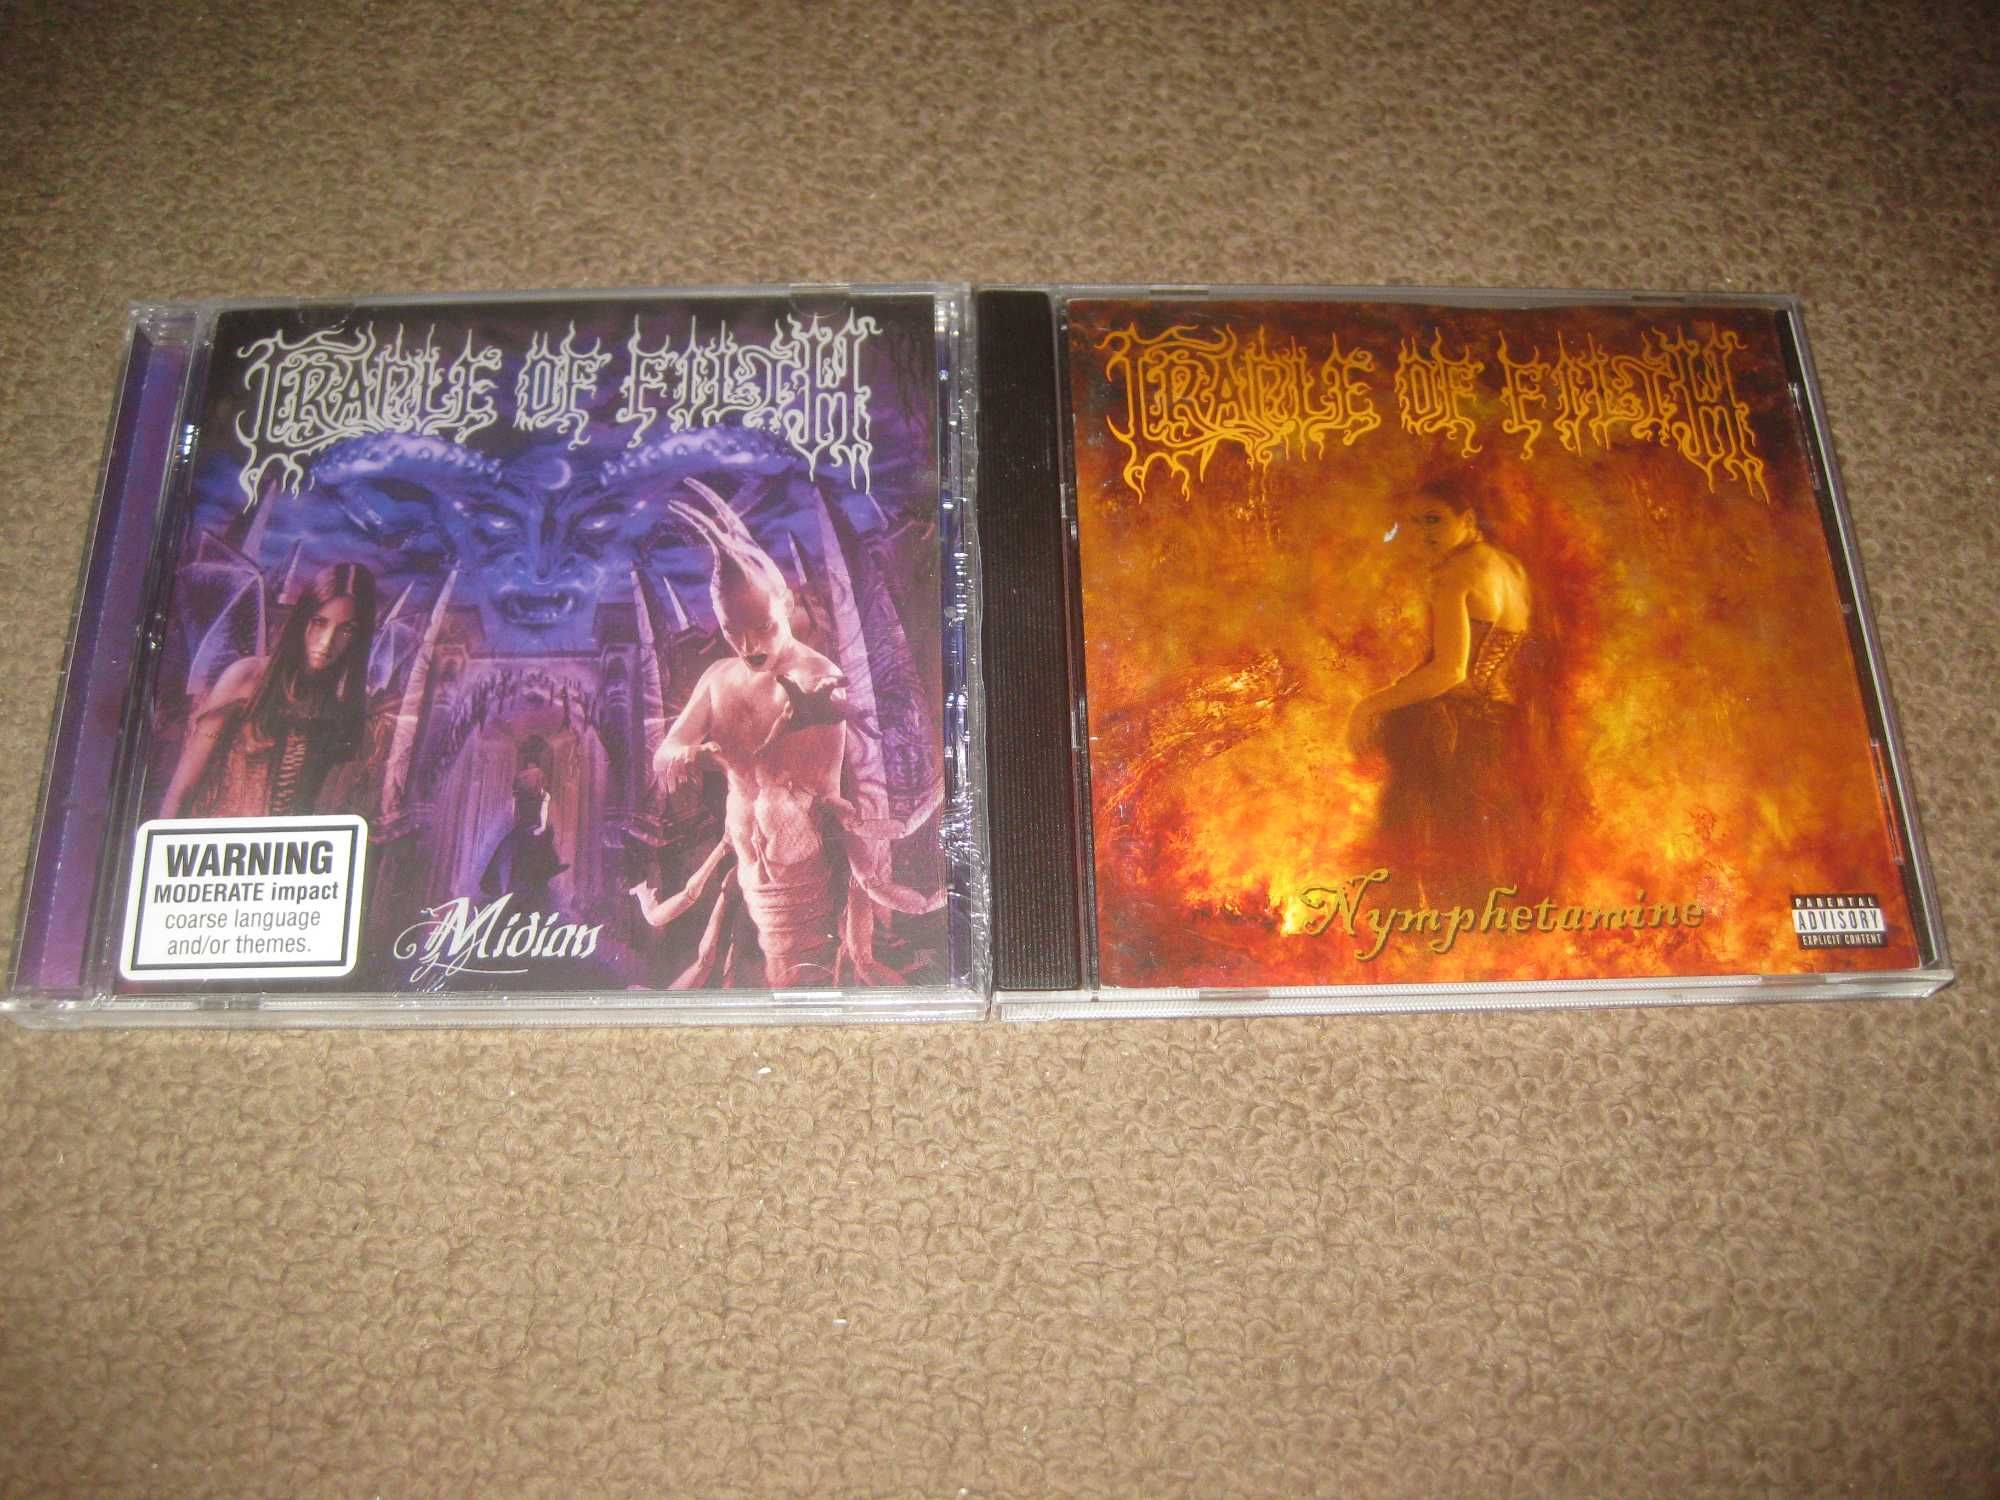 2 CDs dos "Cradle Of Filth"